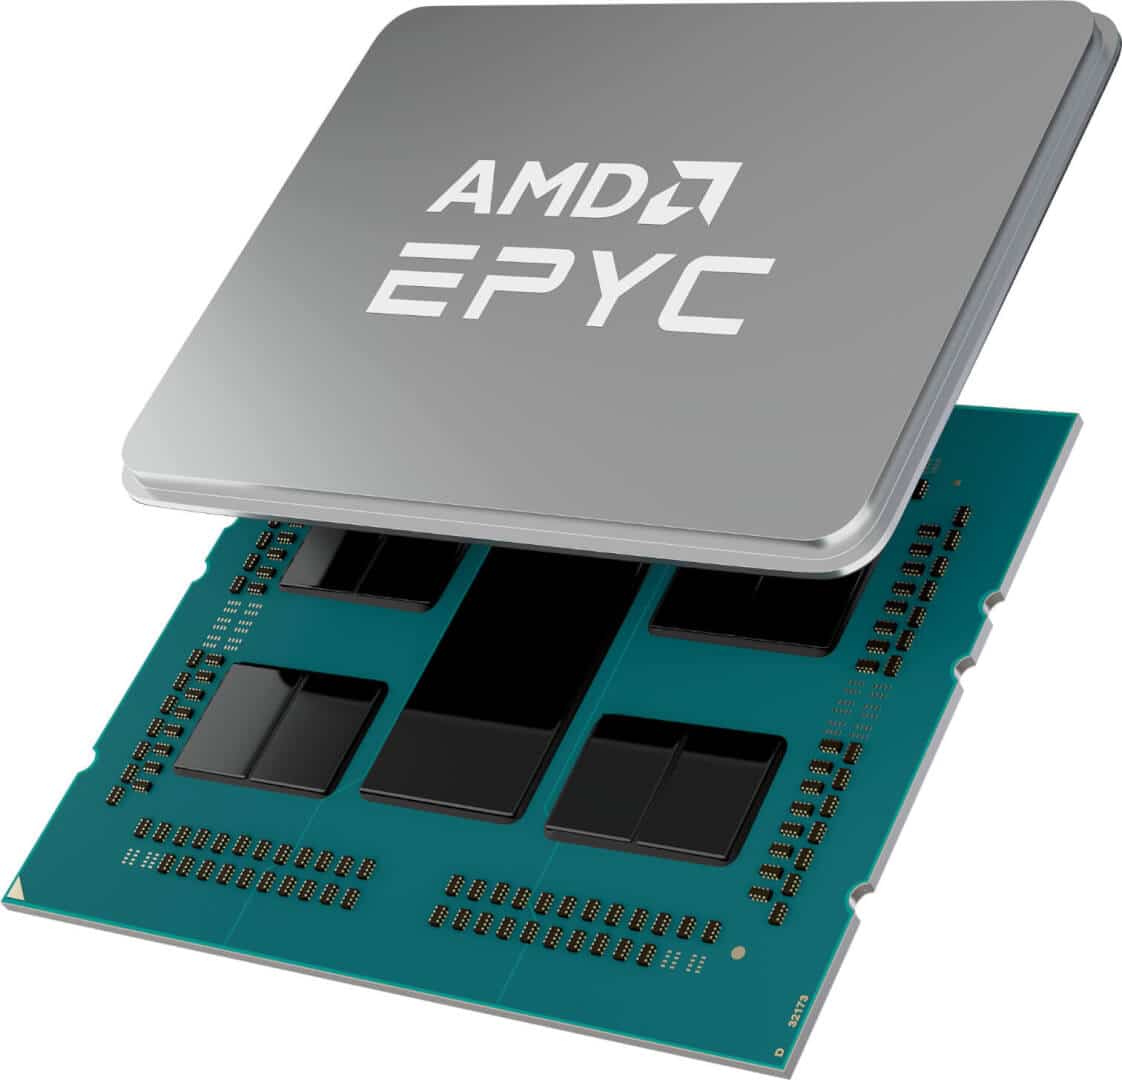 AMD 96 Core Epyc Genoa CPU ~2.6x Faster than Intel’s Xeon Server Flagship, 32C Epyc Beats 40C Xeon [Rumor]